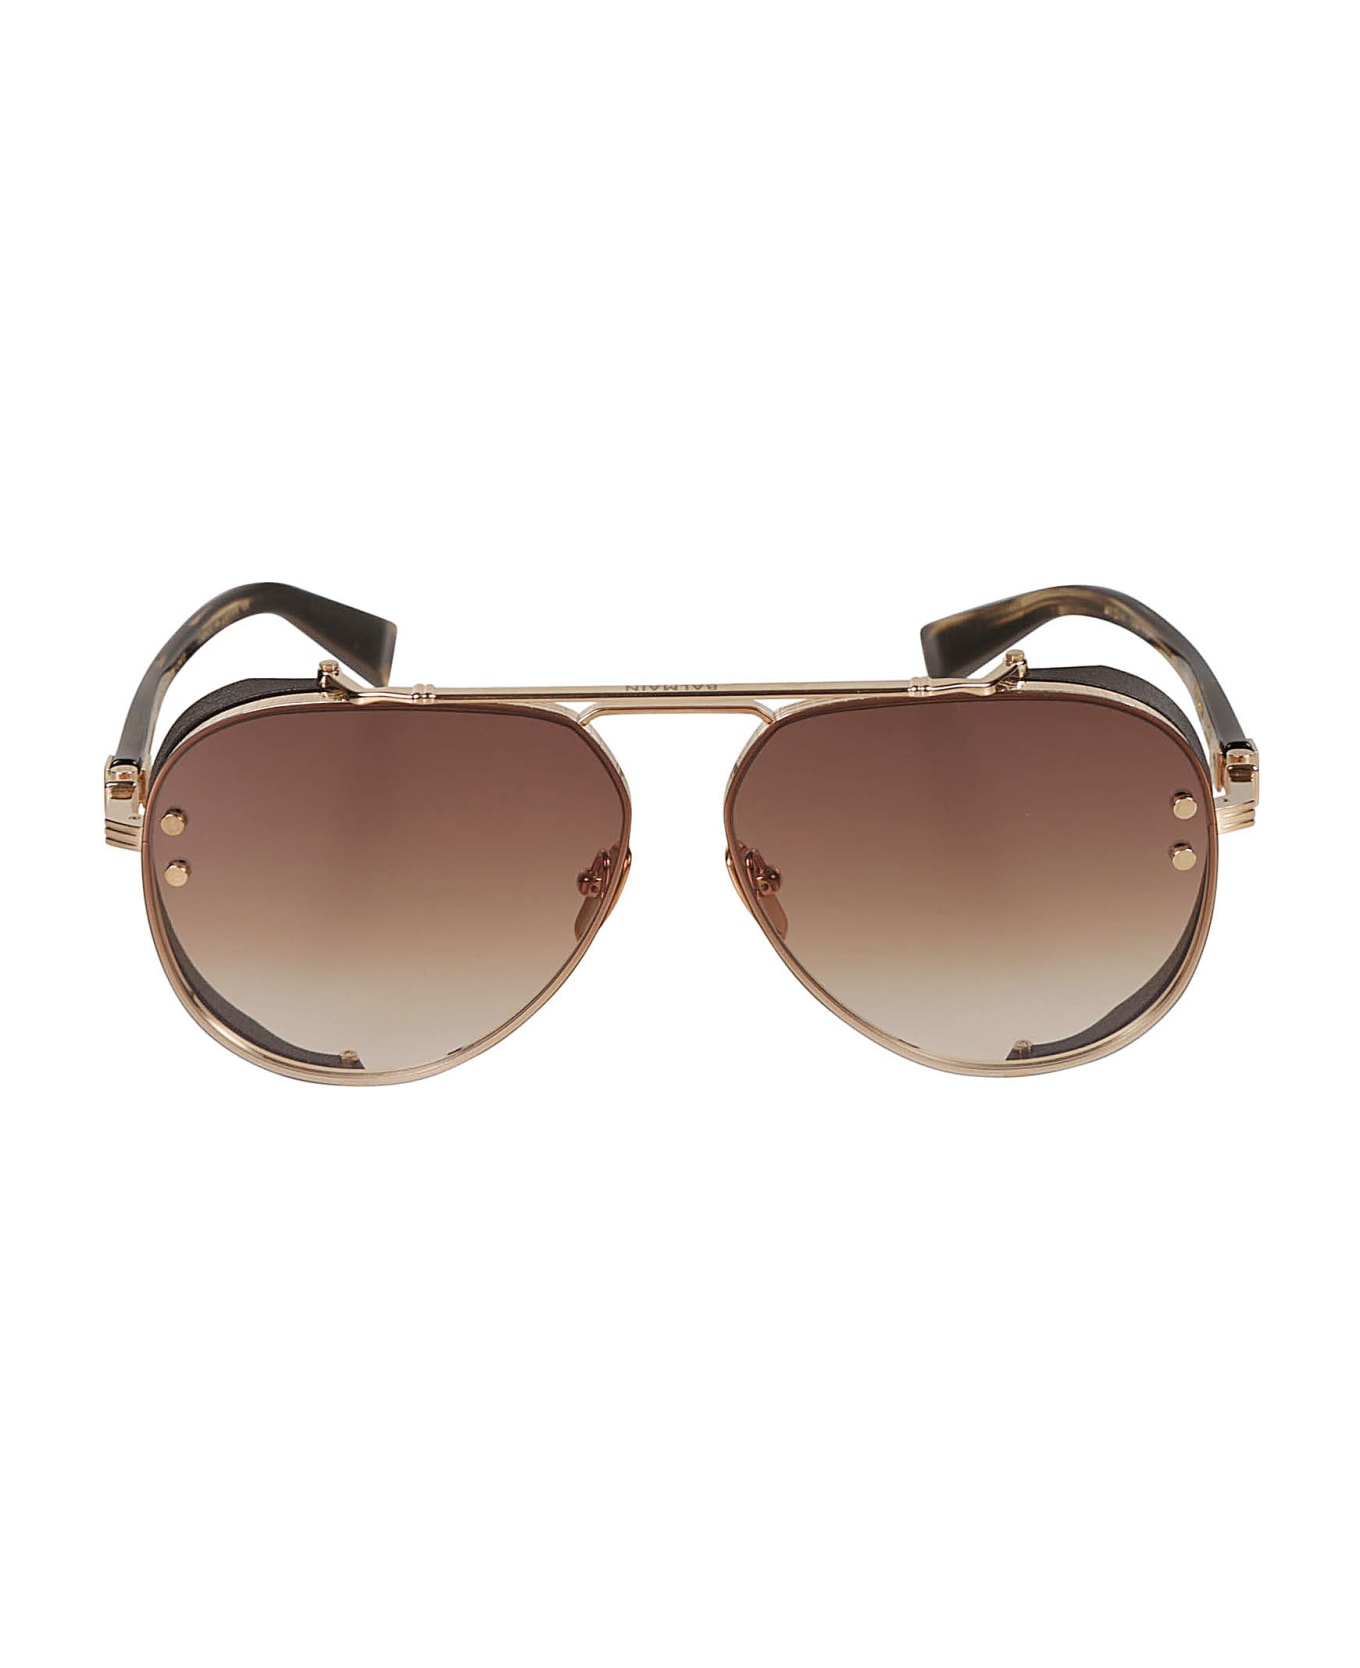 Balmain Captaine Sunglasses Sunglasses - Gold/Brown